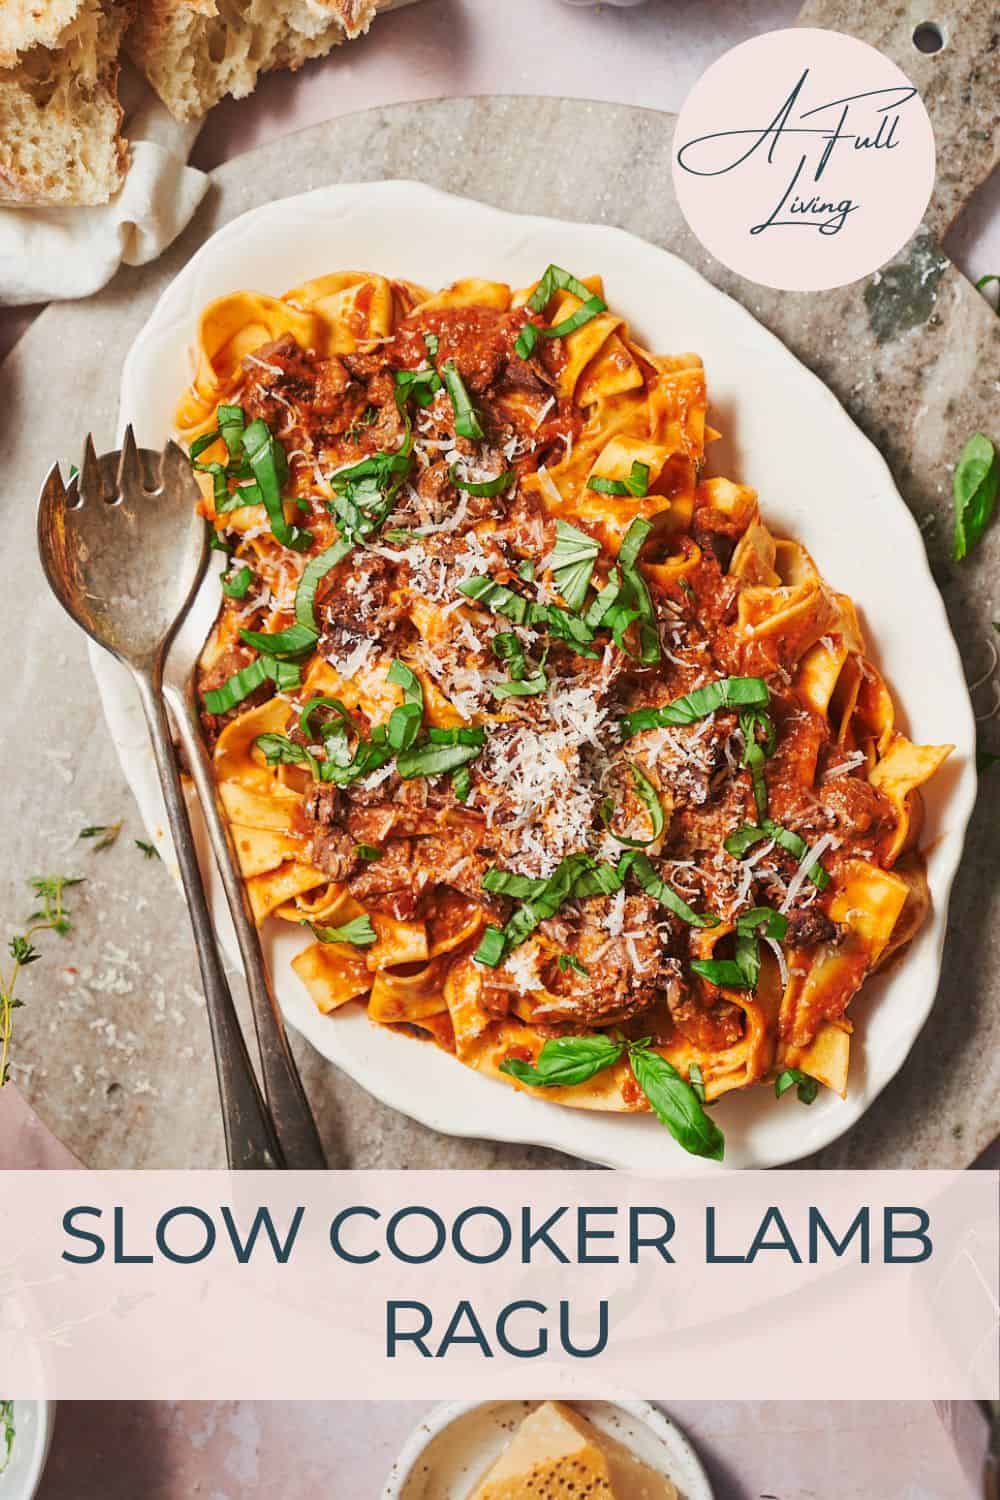 Slow cooker lamb ragu.